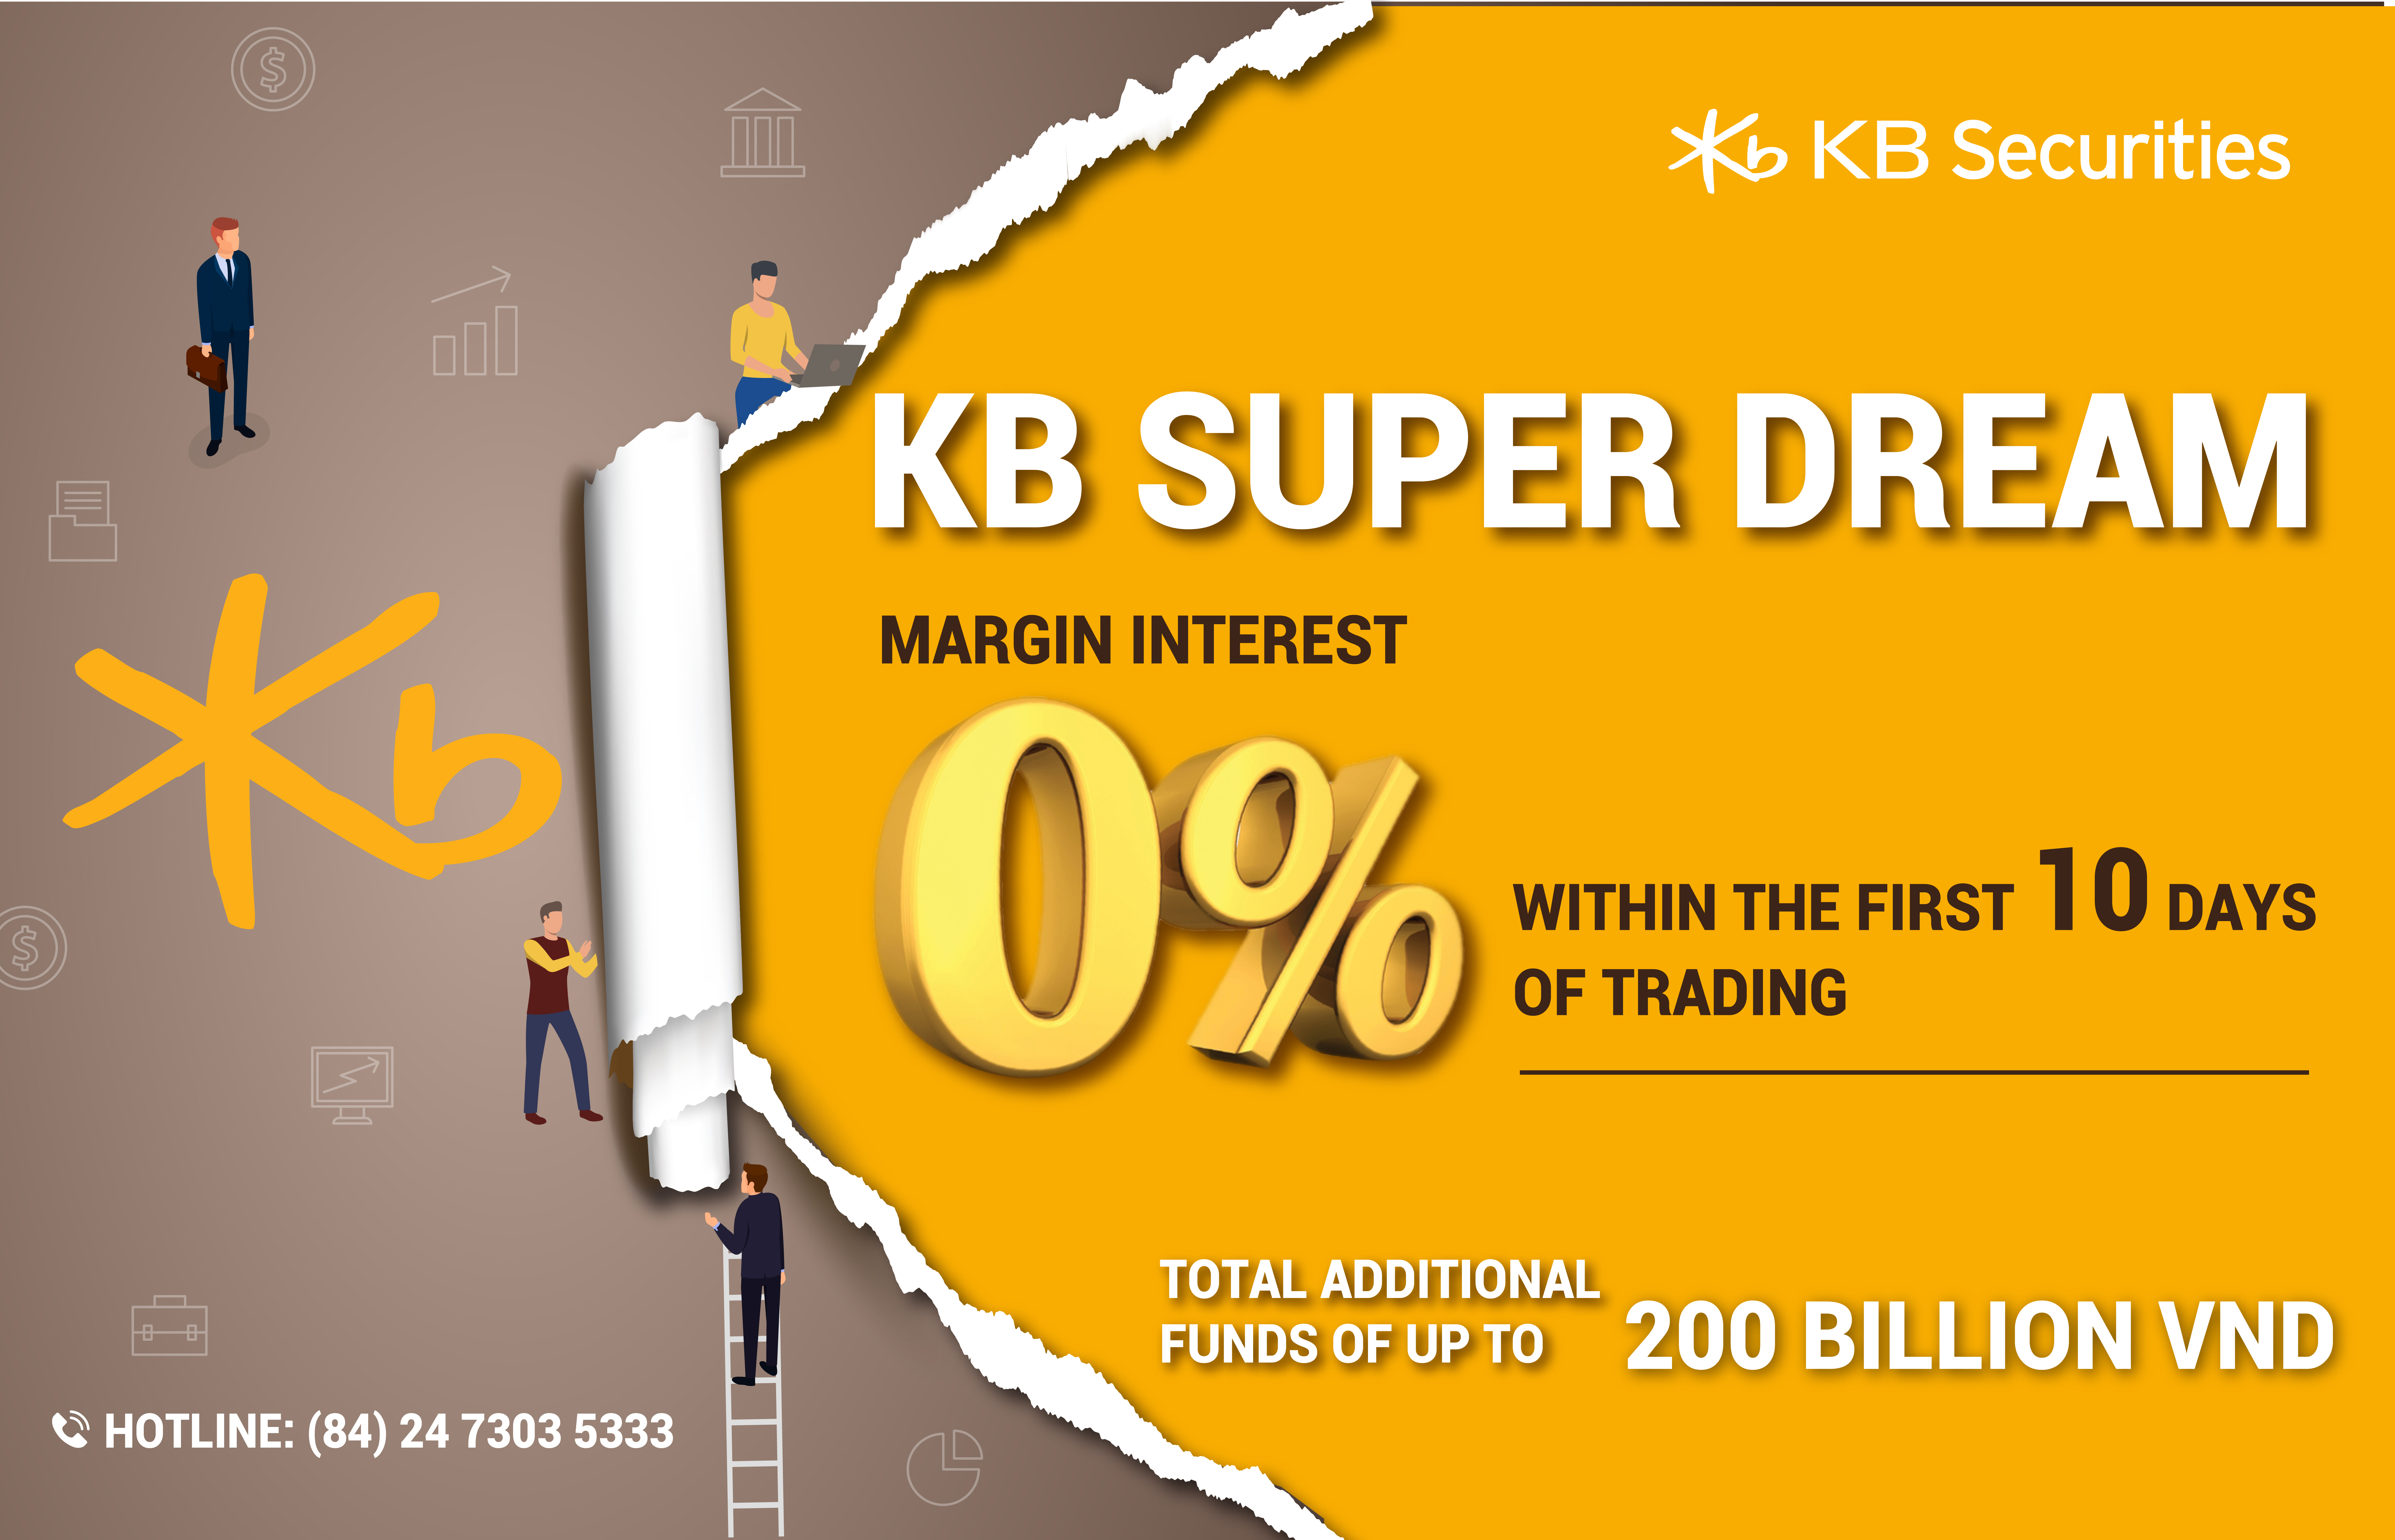 KBSV offers 0% margin interest